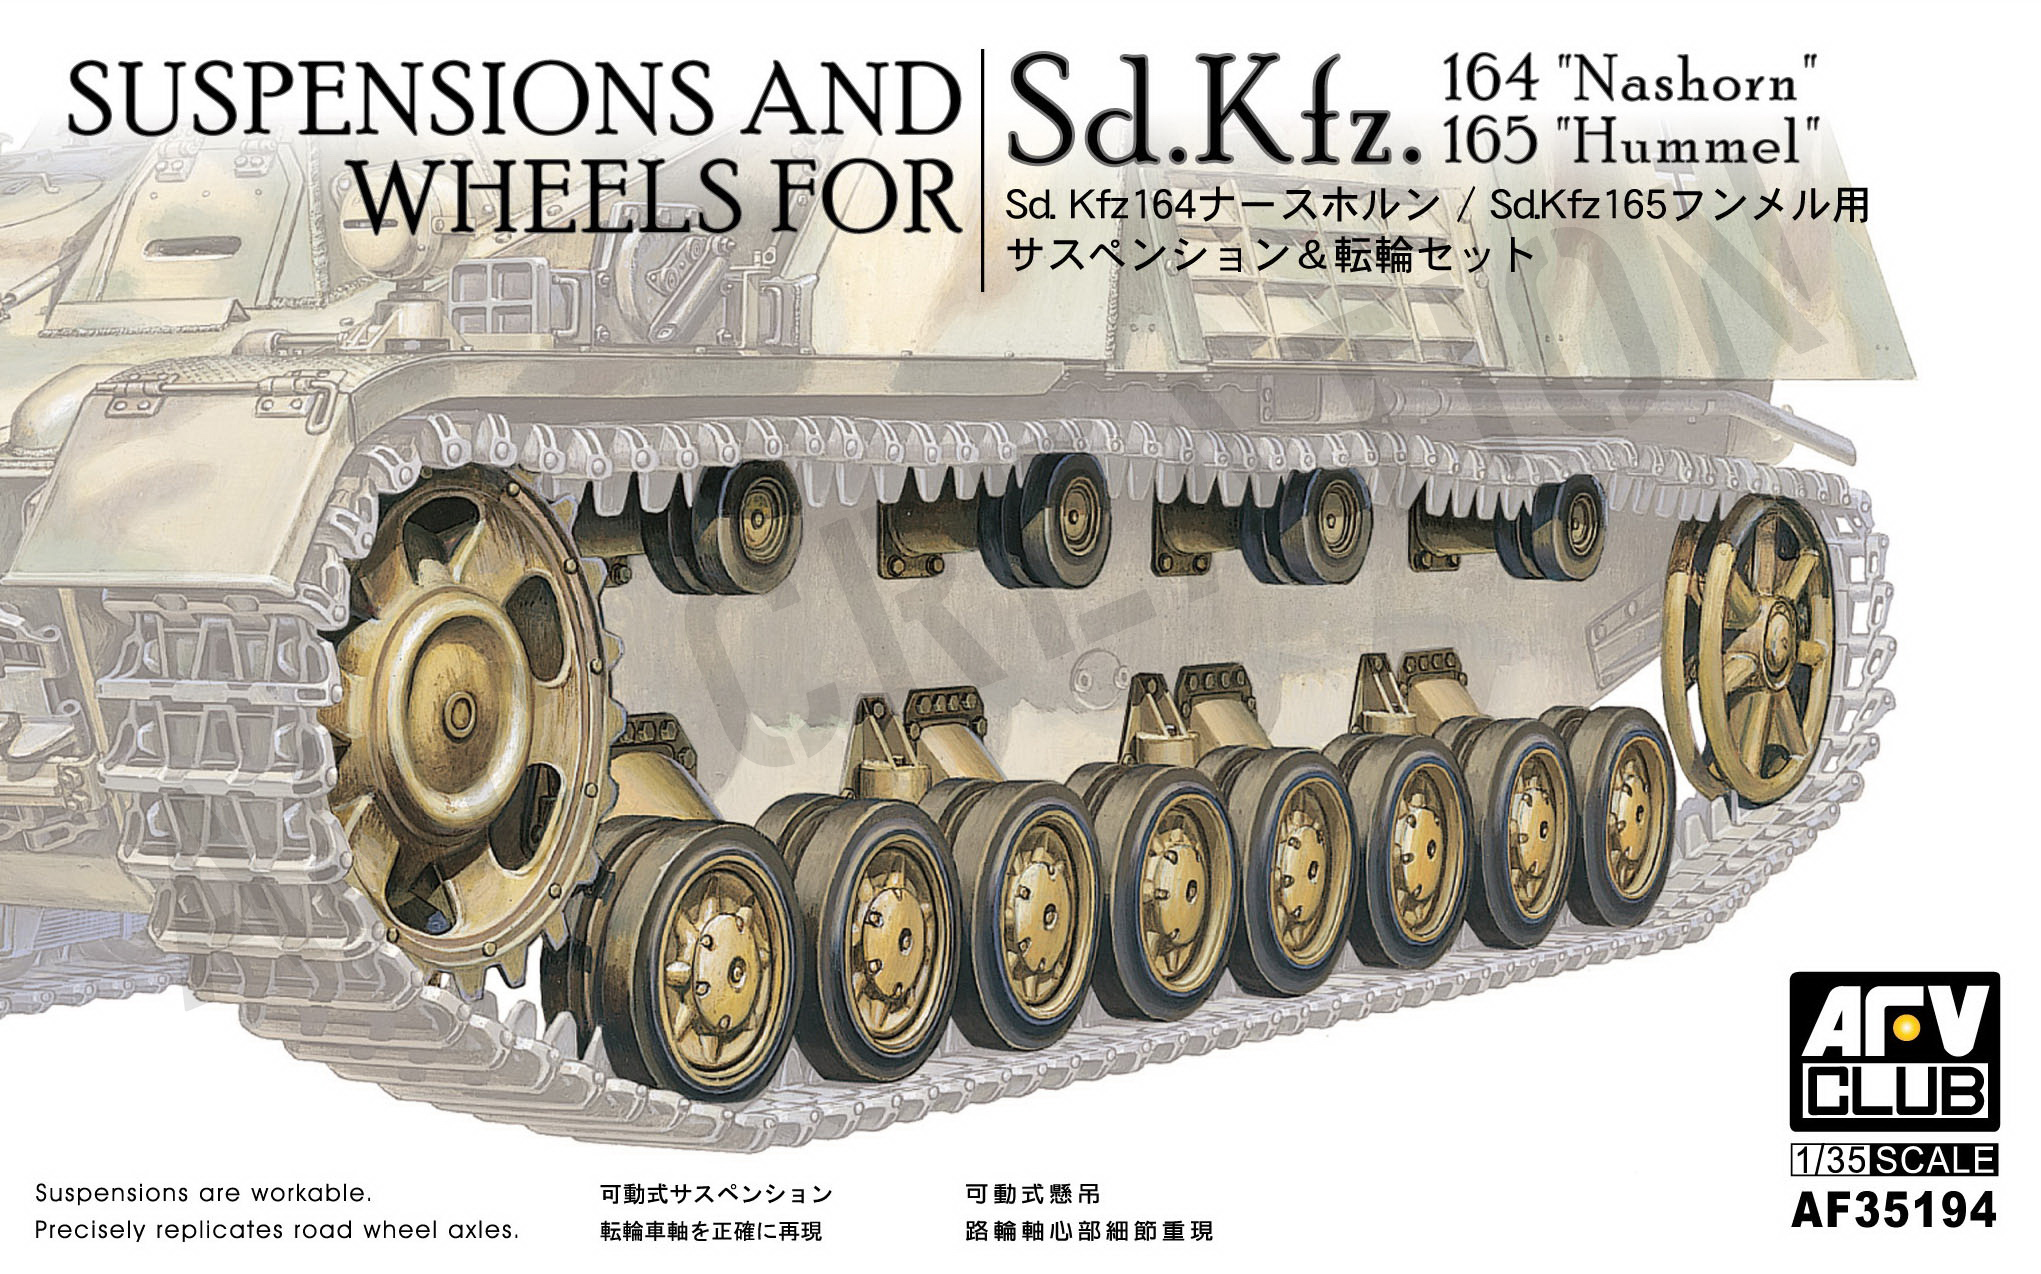 AF35194 Suspensions and Wheels for Sd.Kfz. 164 Nashorn & Sd.Kfz. 165 Hummel